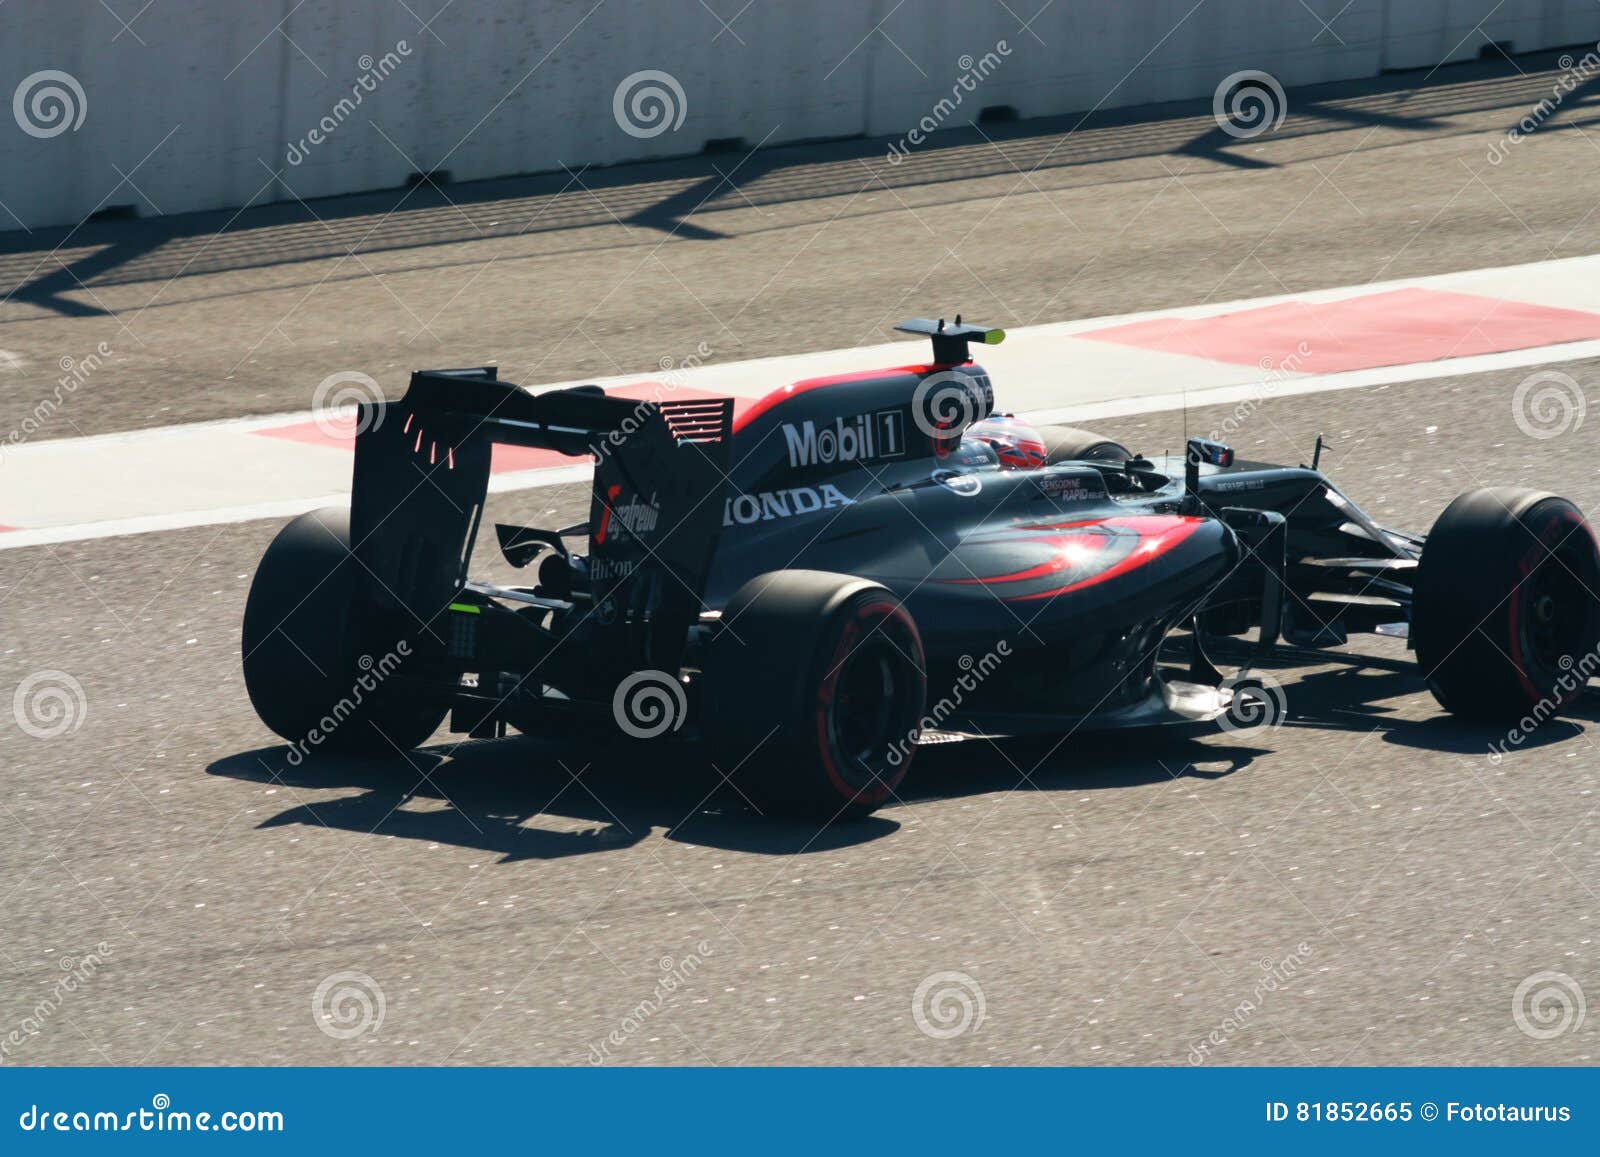 Mclaren Honda Grand Prix F1 16 Editorial Image Image Of Adrenaline Black